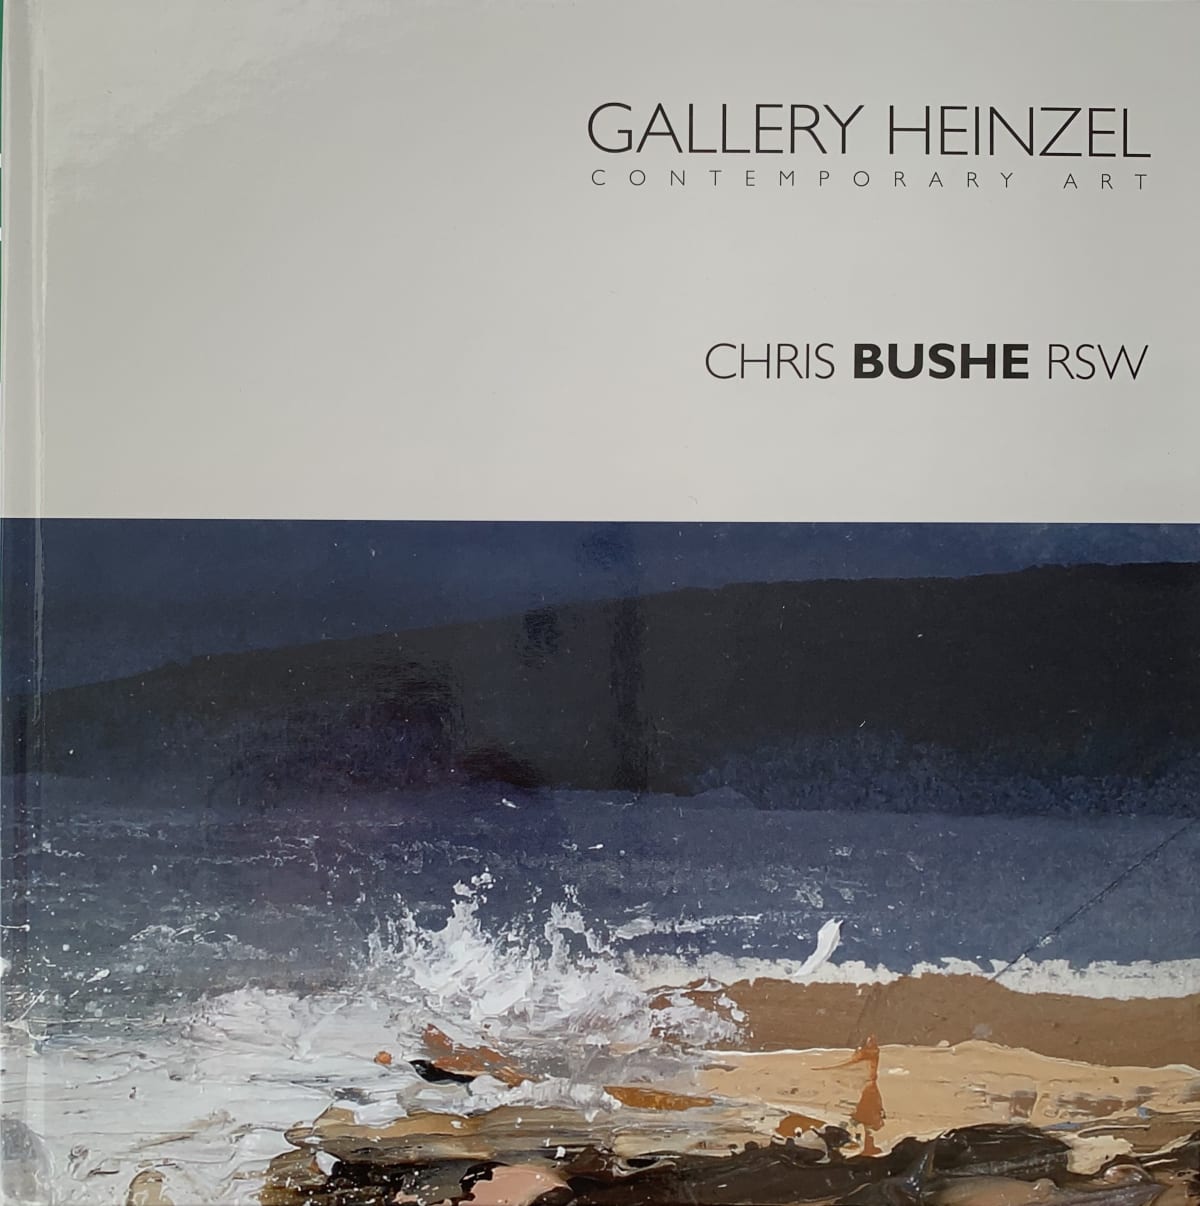 Gallery Heinzel present CHRIS BUSHE RSW